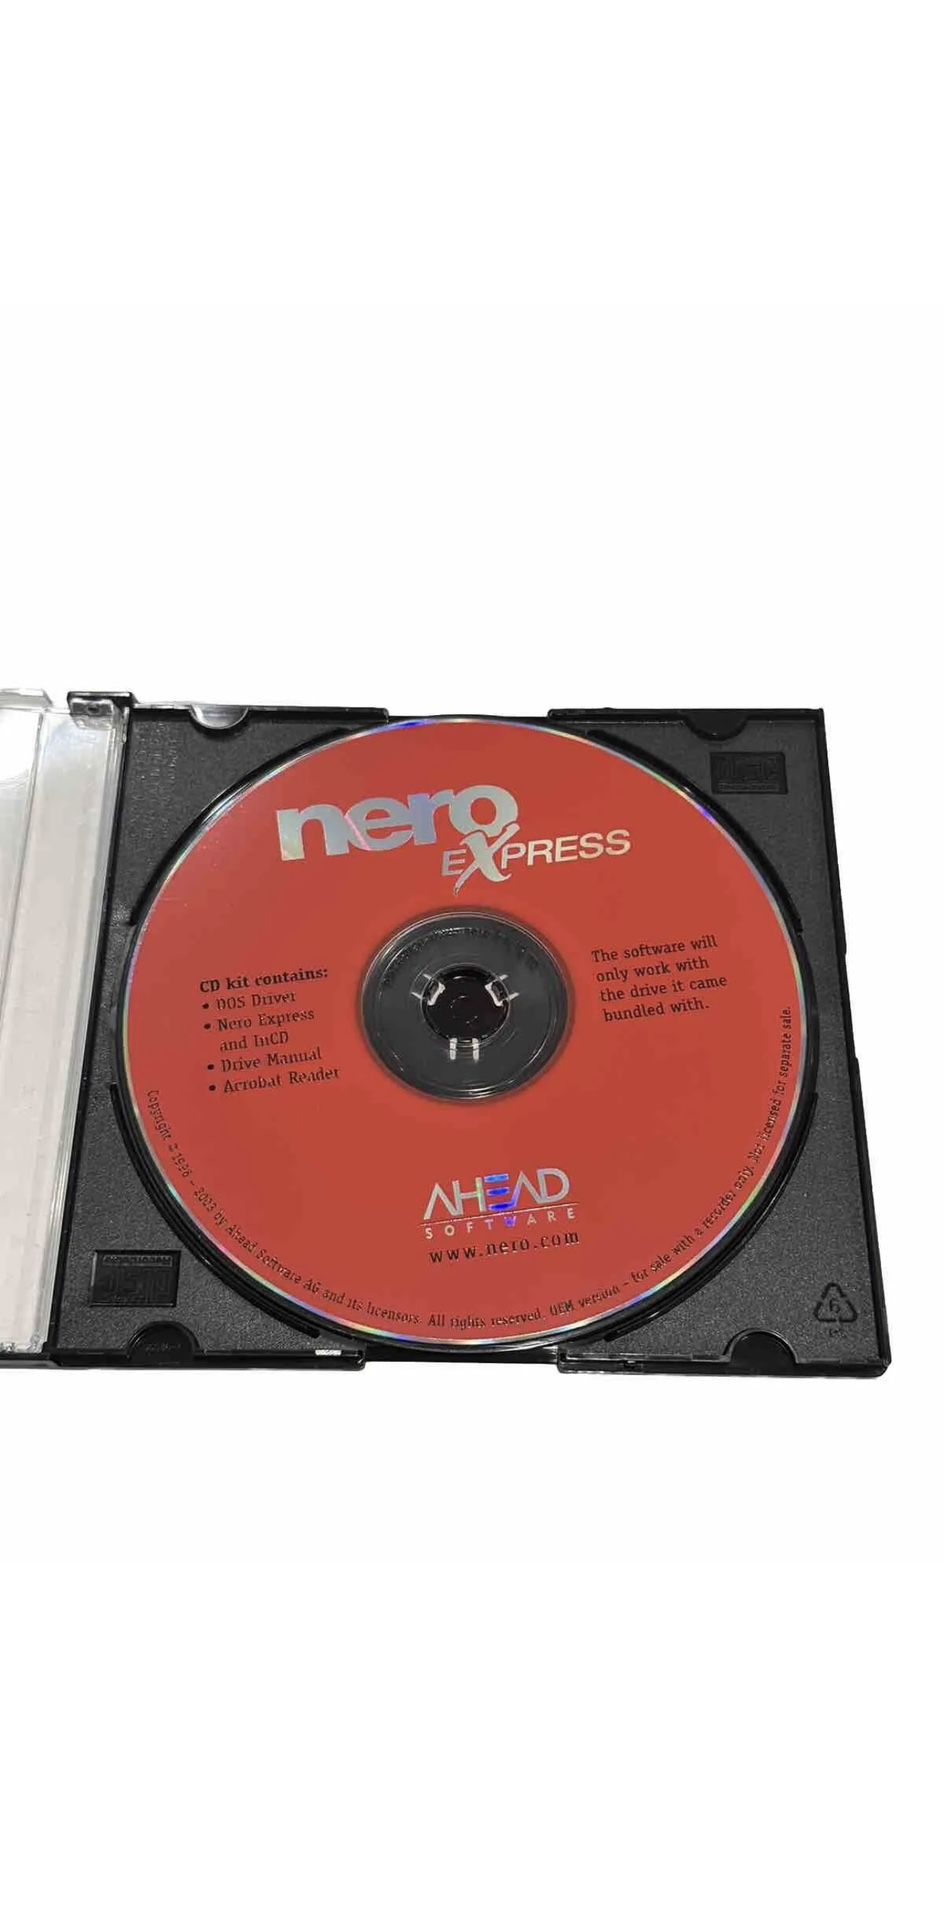 Nero Burning Rom CD Burning Software Ahead Software Nero Version 5.5